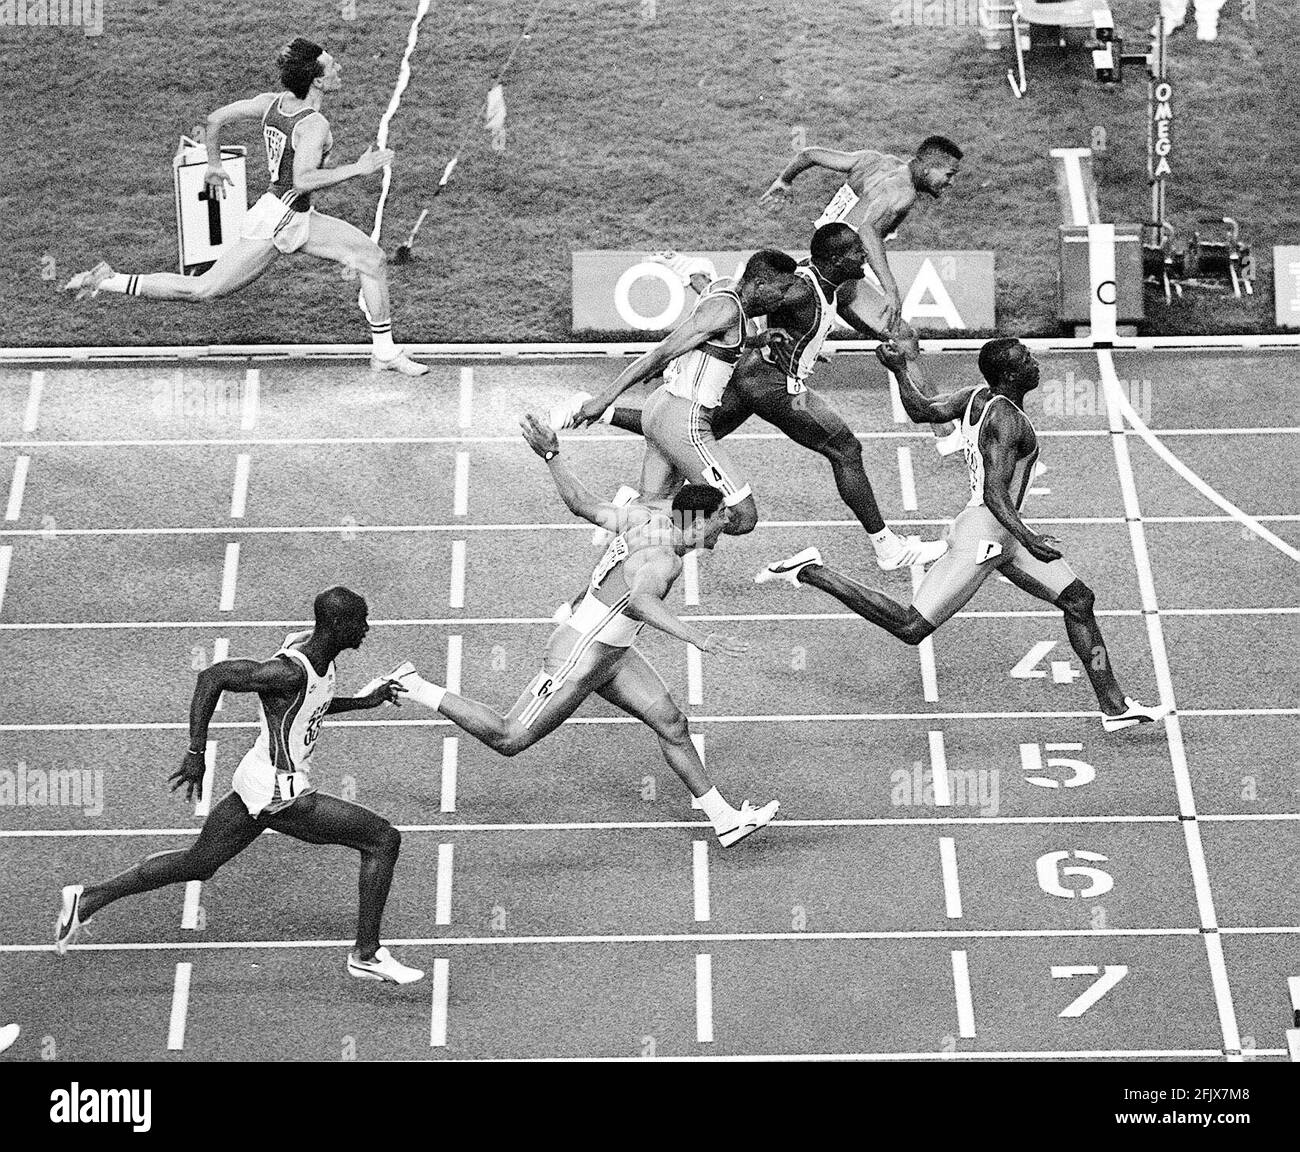 LINFORD CHRISTIE WINS THE 100m FINAL IN BARCELONA 1992 PICTURE DAVID ASHDOWN Stock Photo